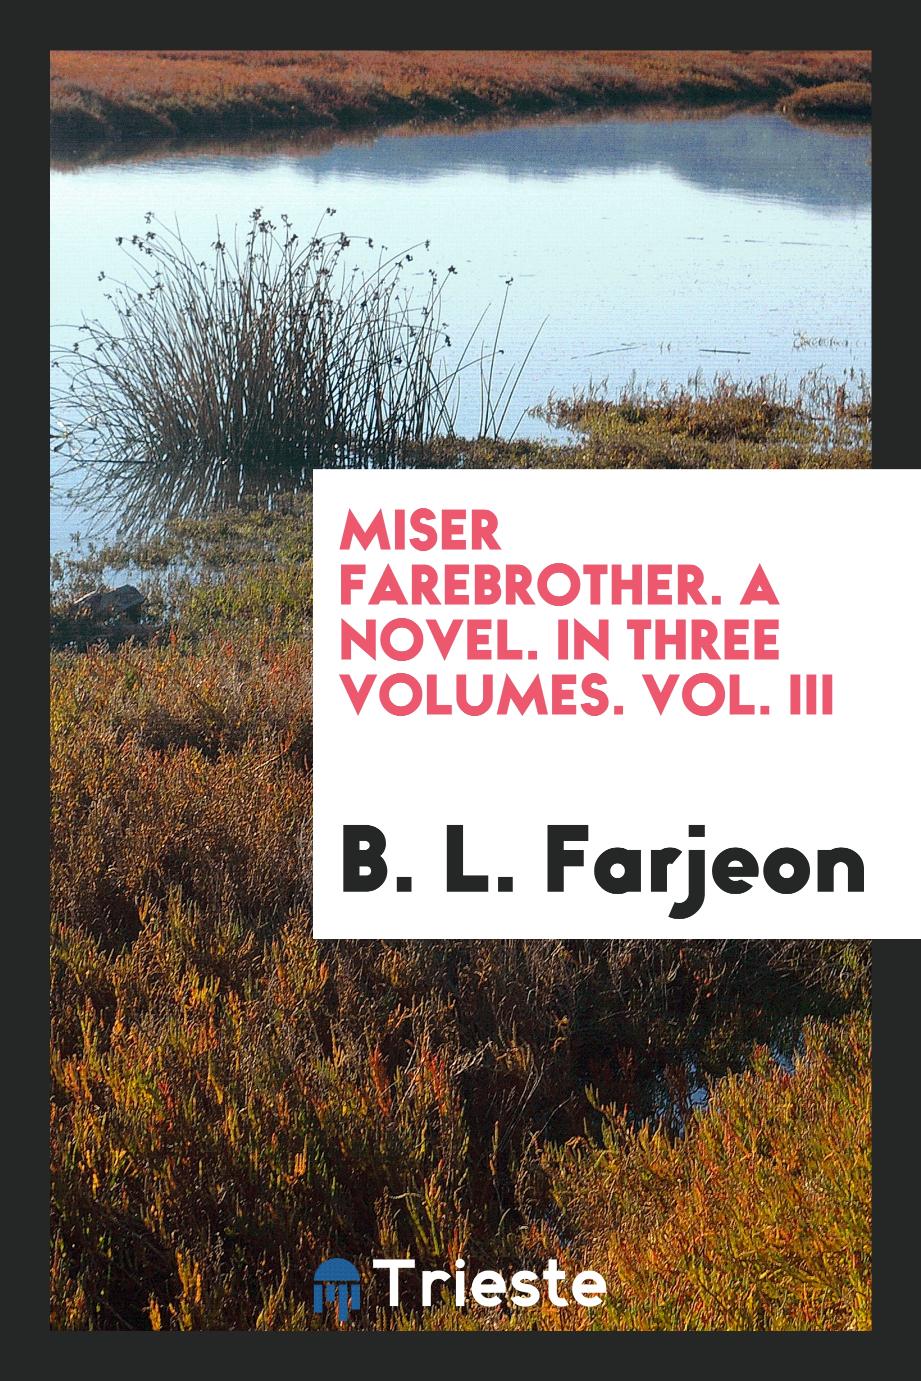 Miser Farebrother. A novel. In three volumes. Vol. III